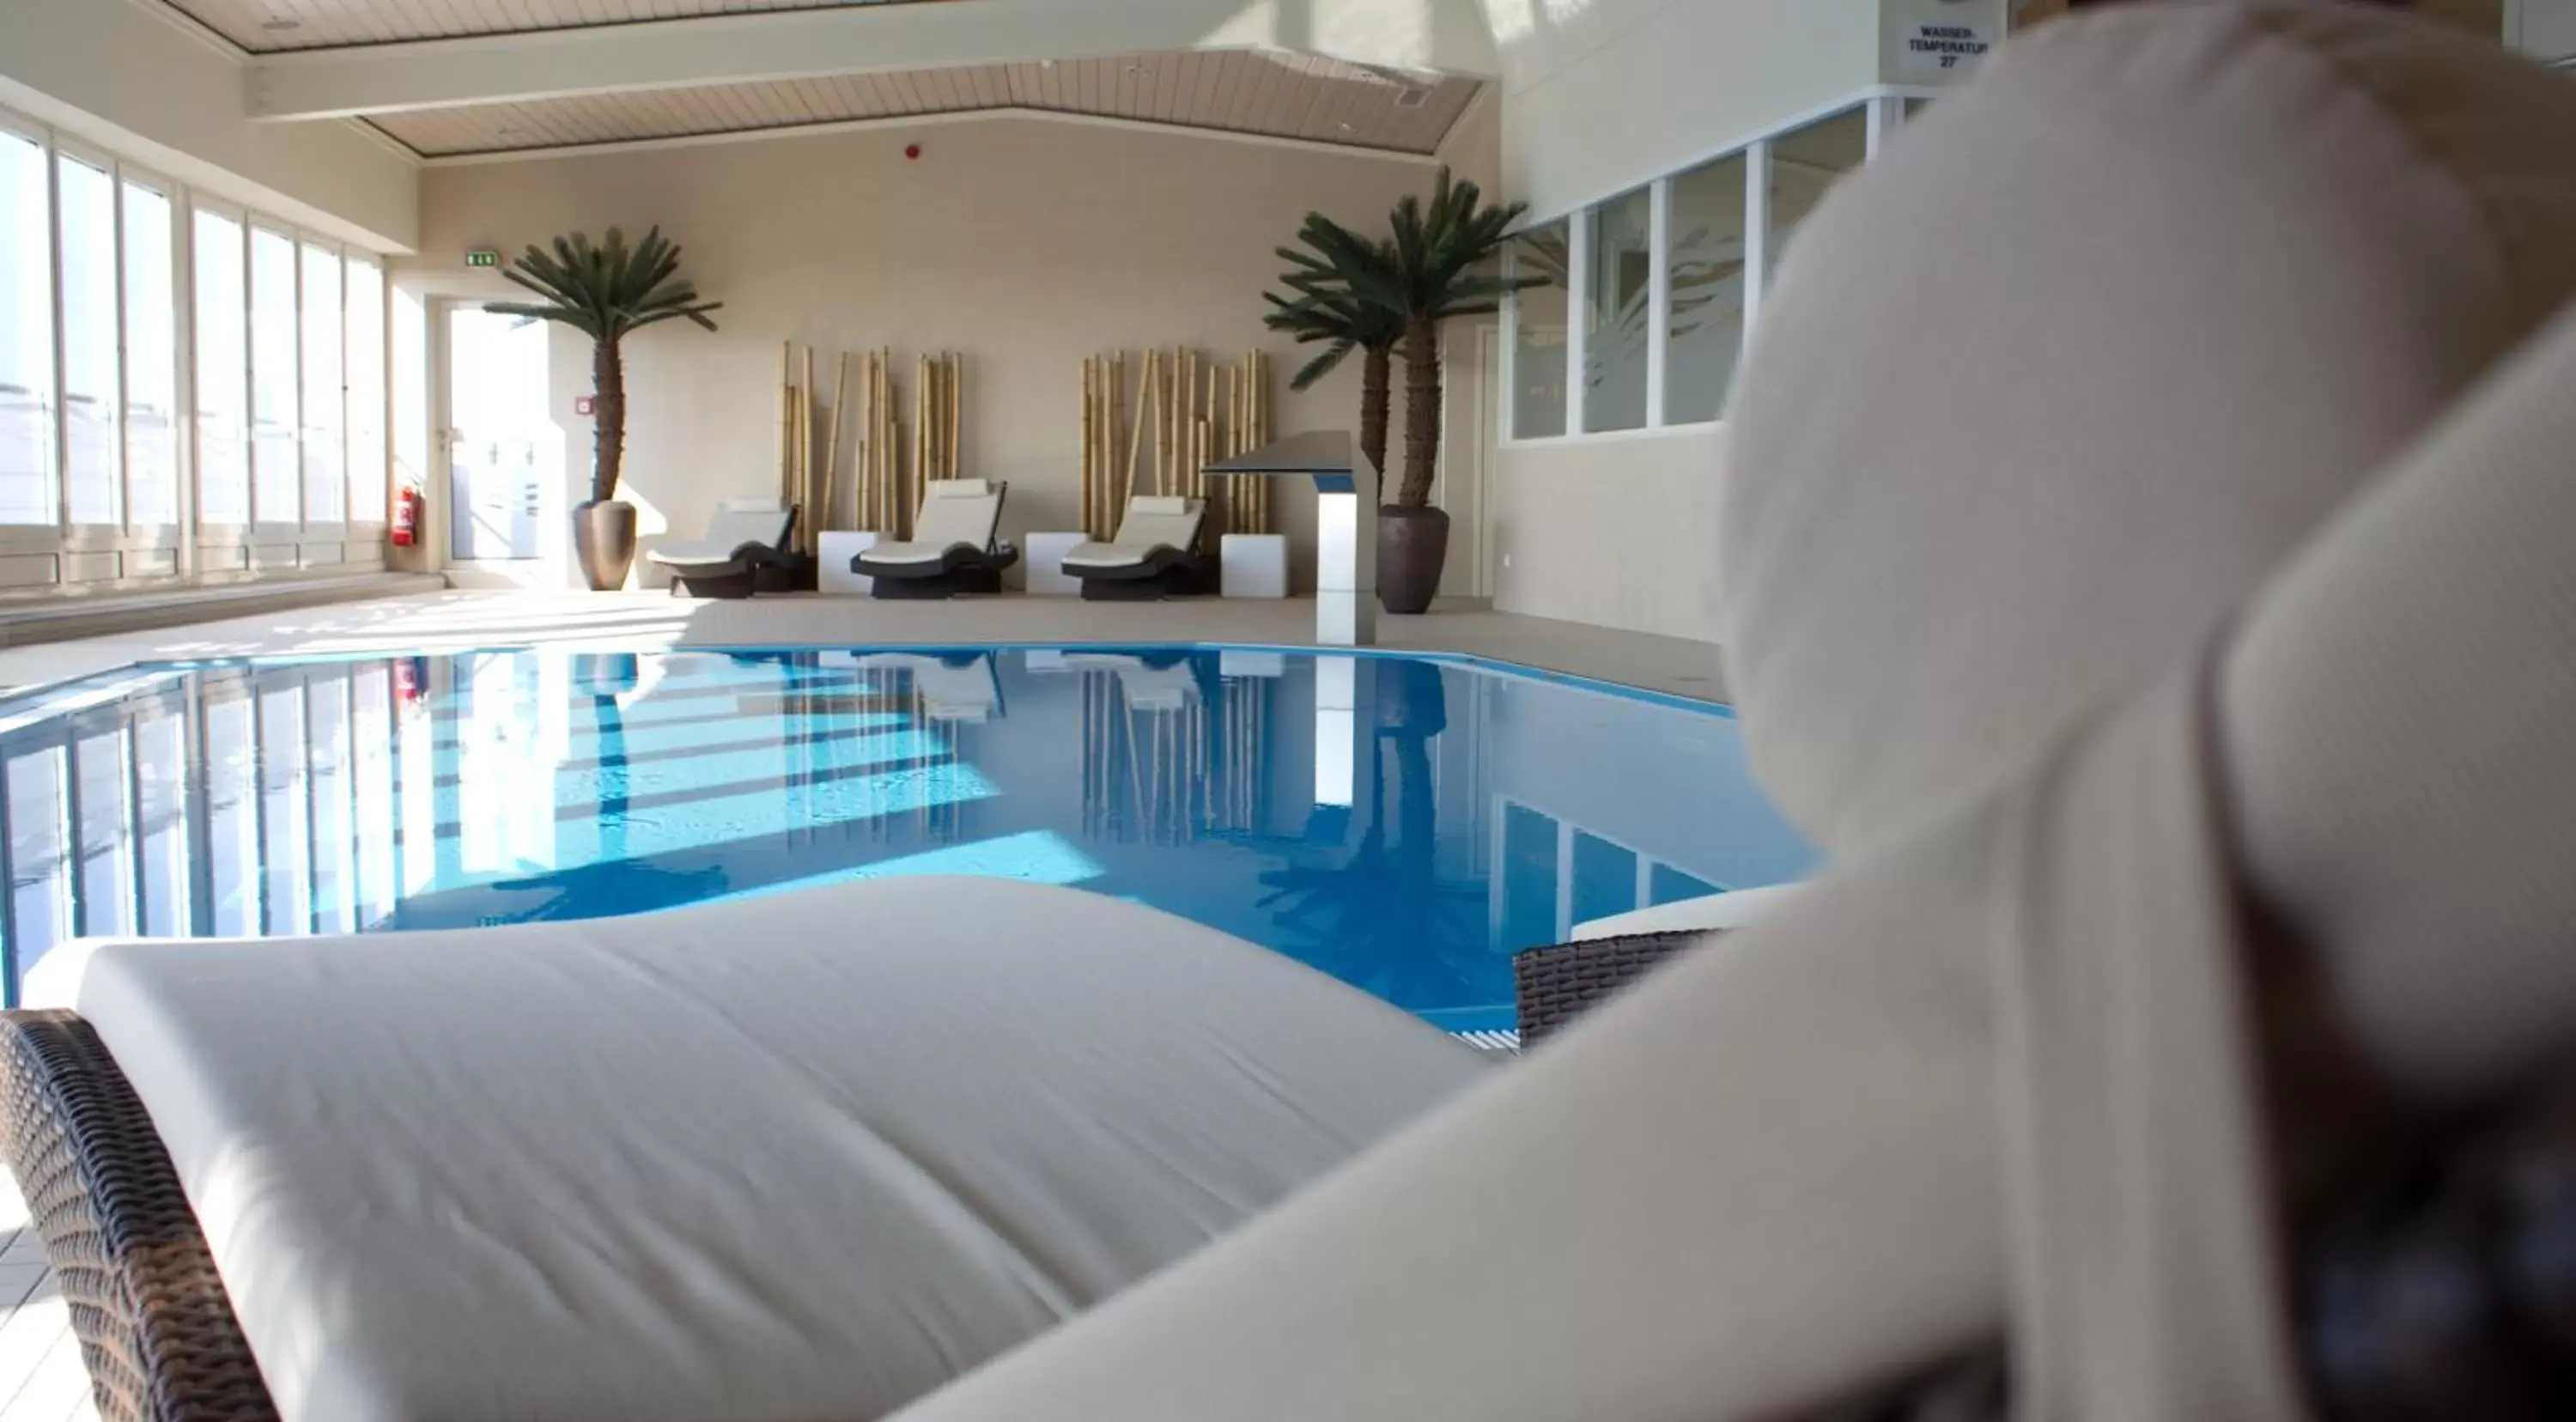 Spa and wellness centre/facilities, Swimming Pool in Radisson Blu Hotel Cottbus